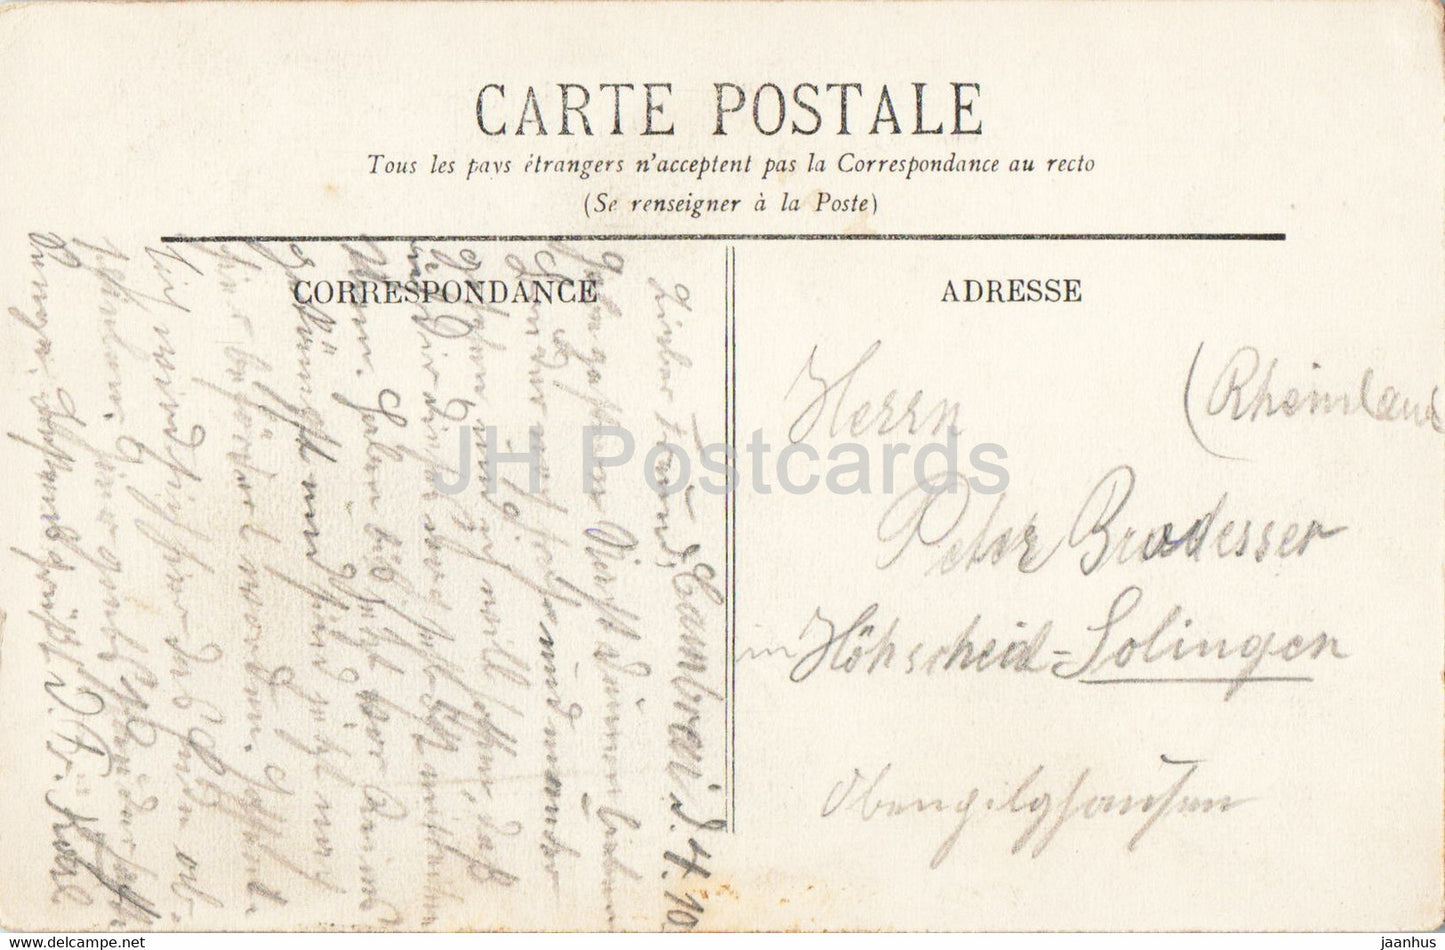 Cambrai - Batiste - monument - carte postale ancienne - 1910 - France - occasion